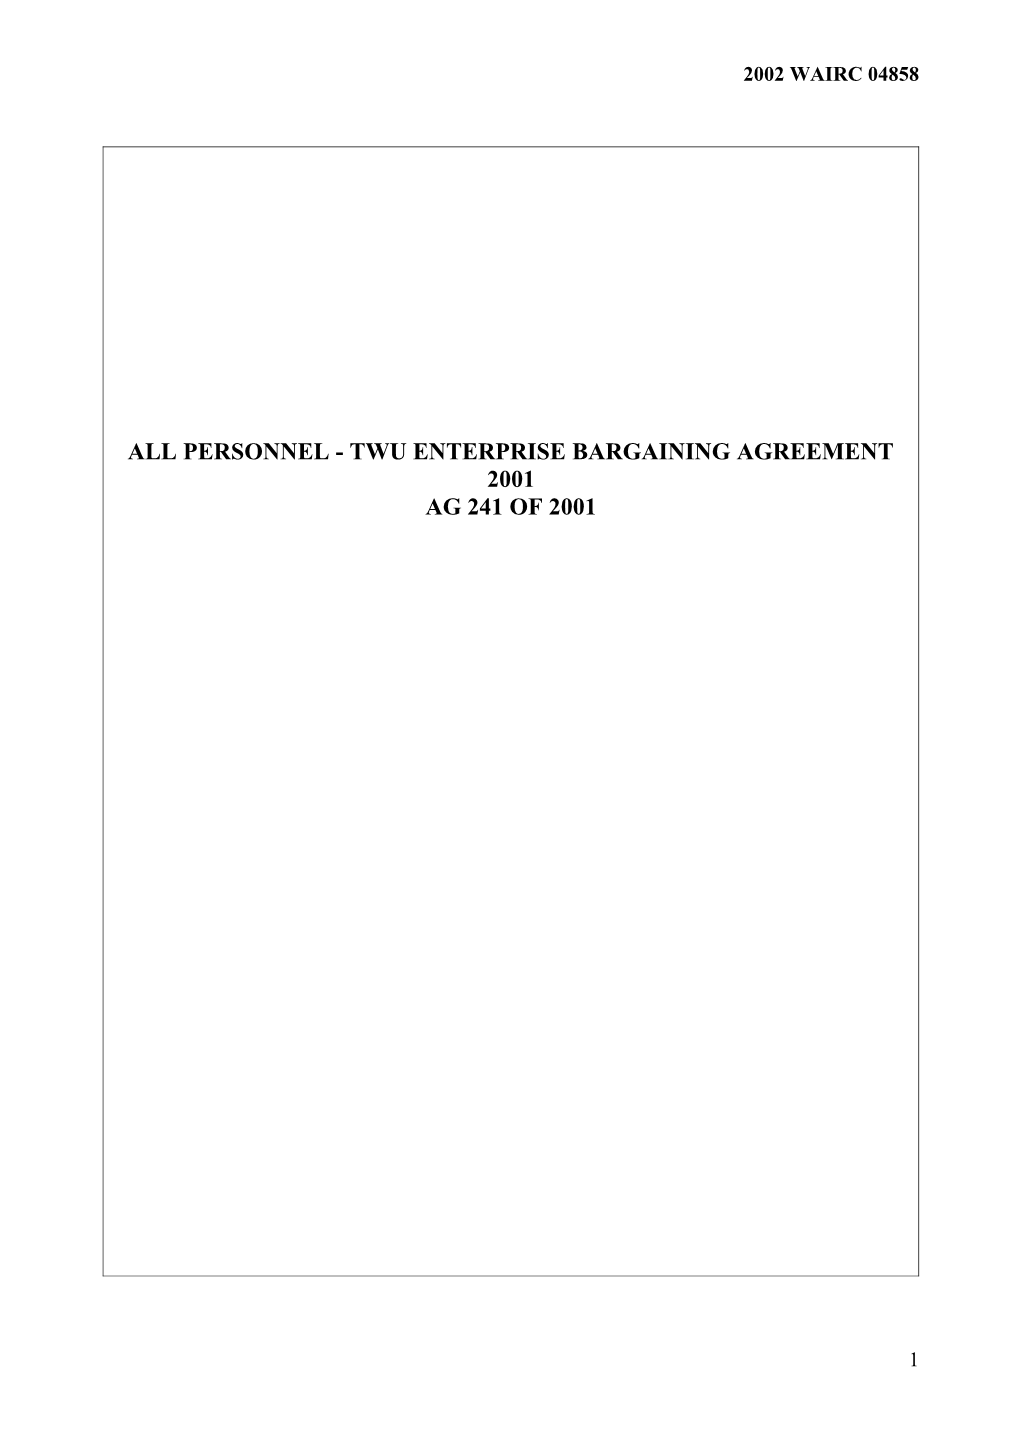 All Personnel - TWU Enterprise Bargaining Agreement 2001